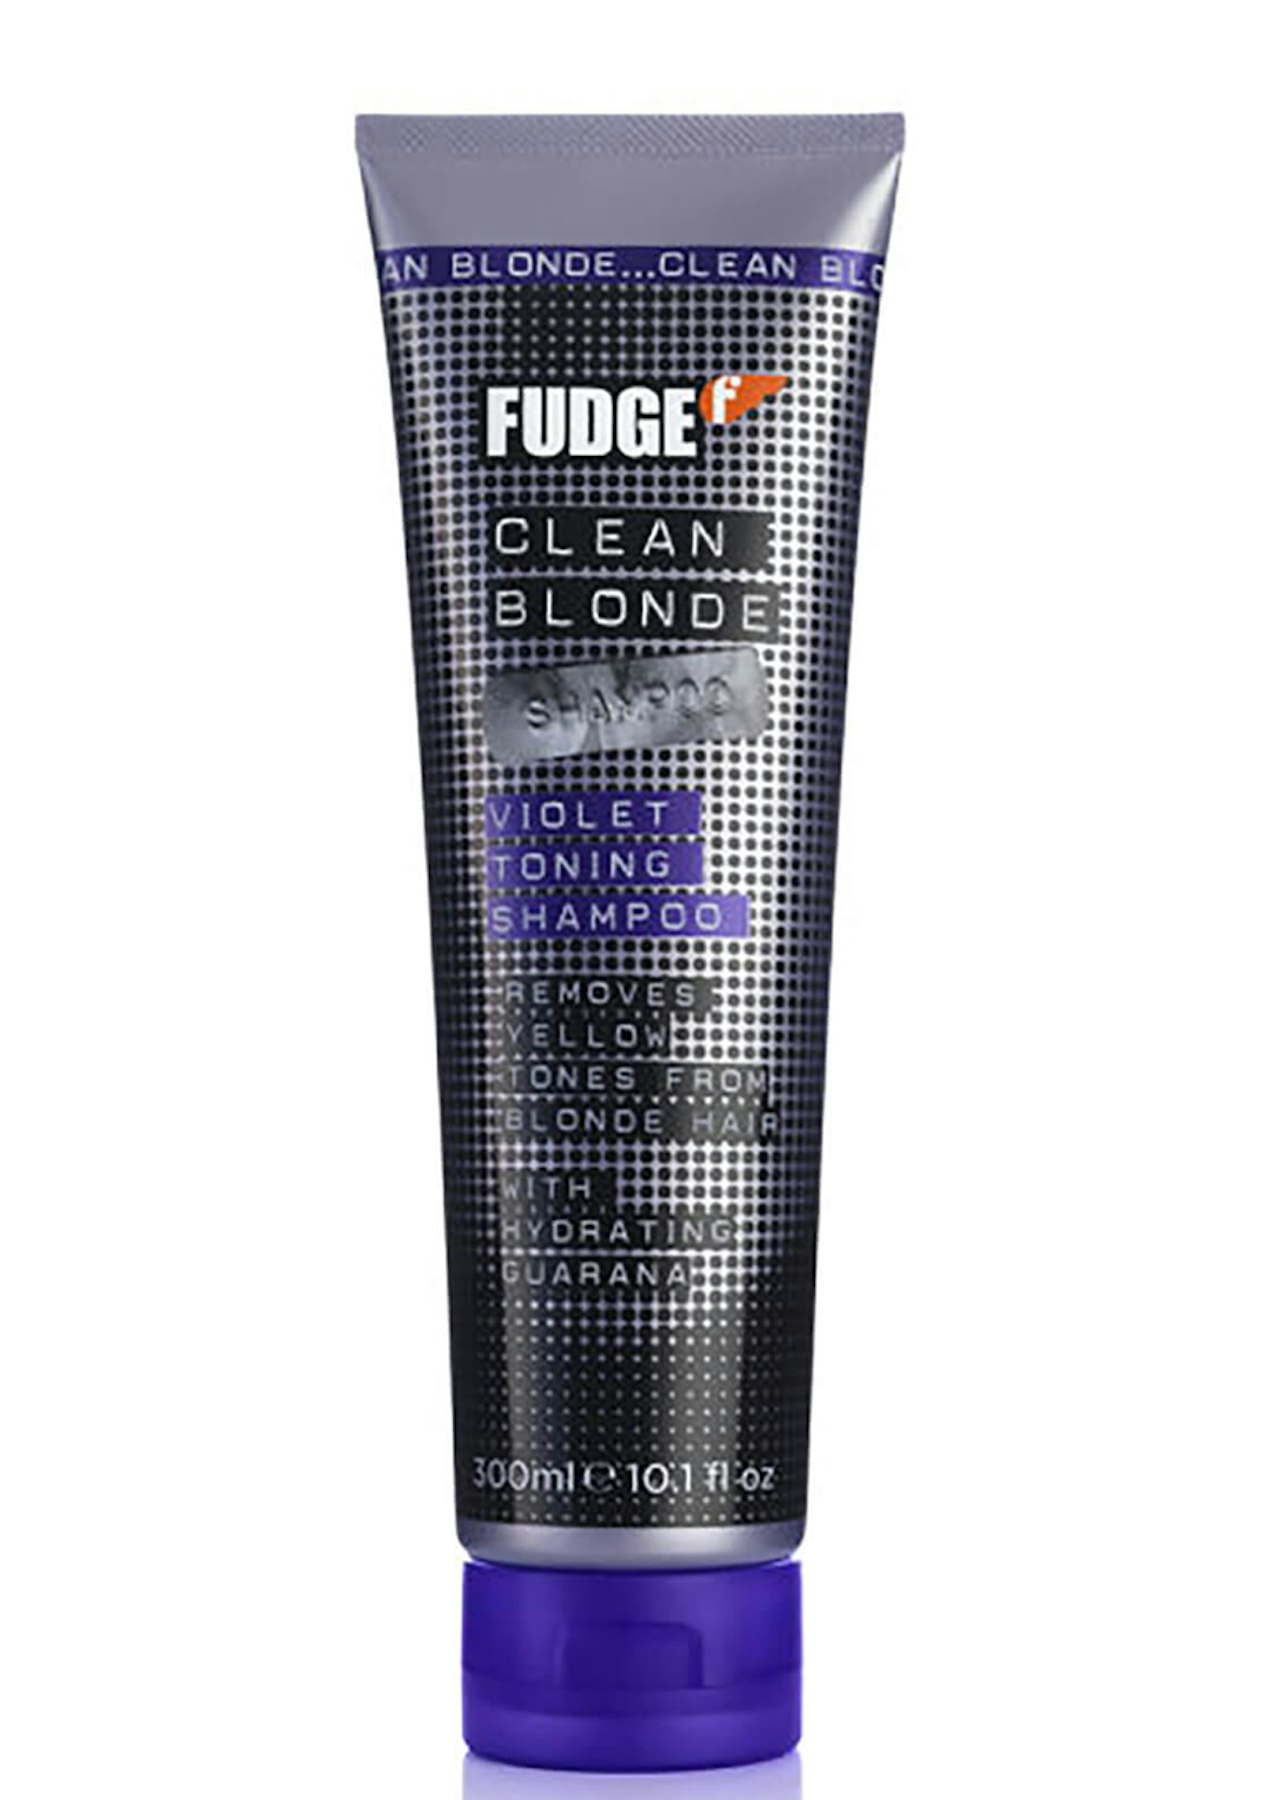 Fudge Blonde Violet Shampoo 300ml Best Selling Haircare Brands